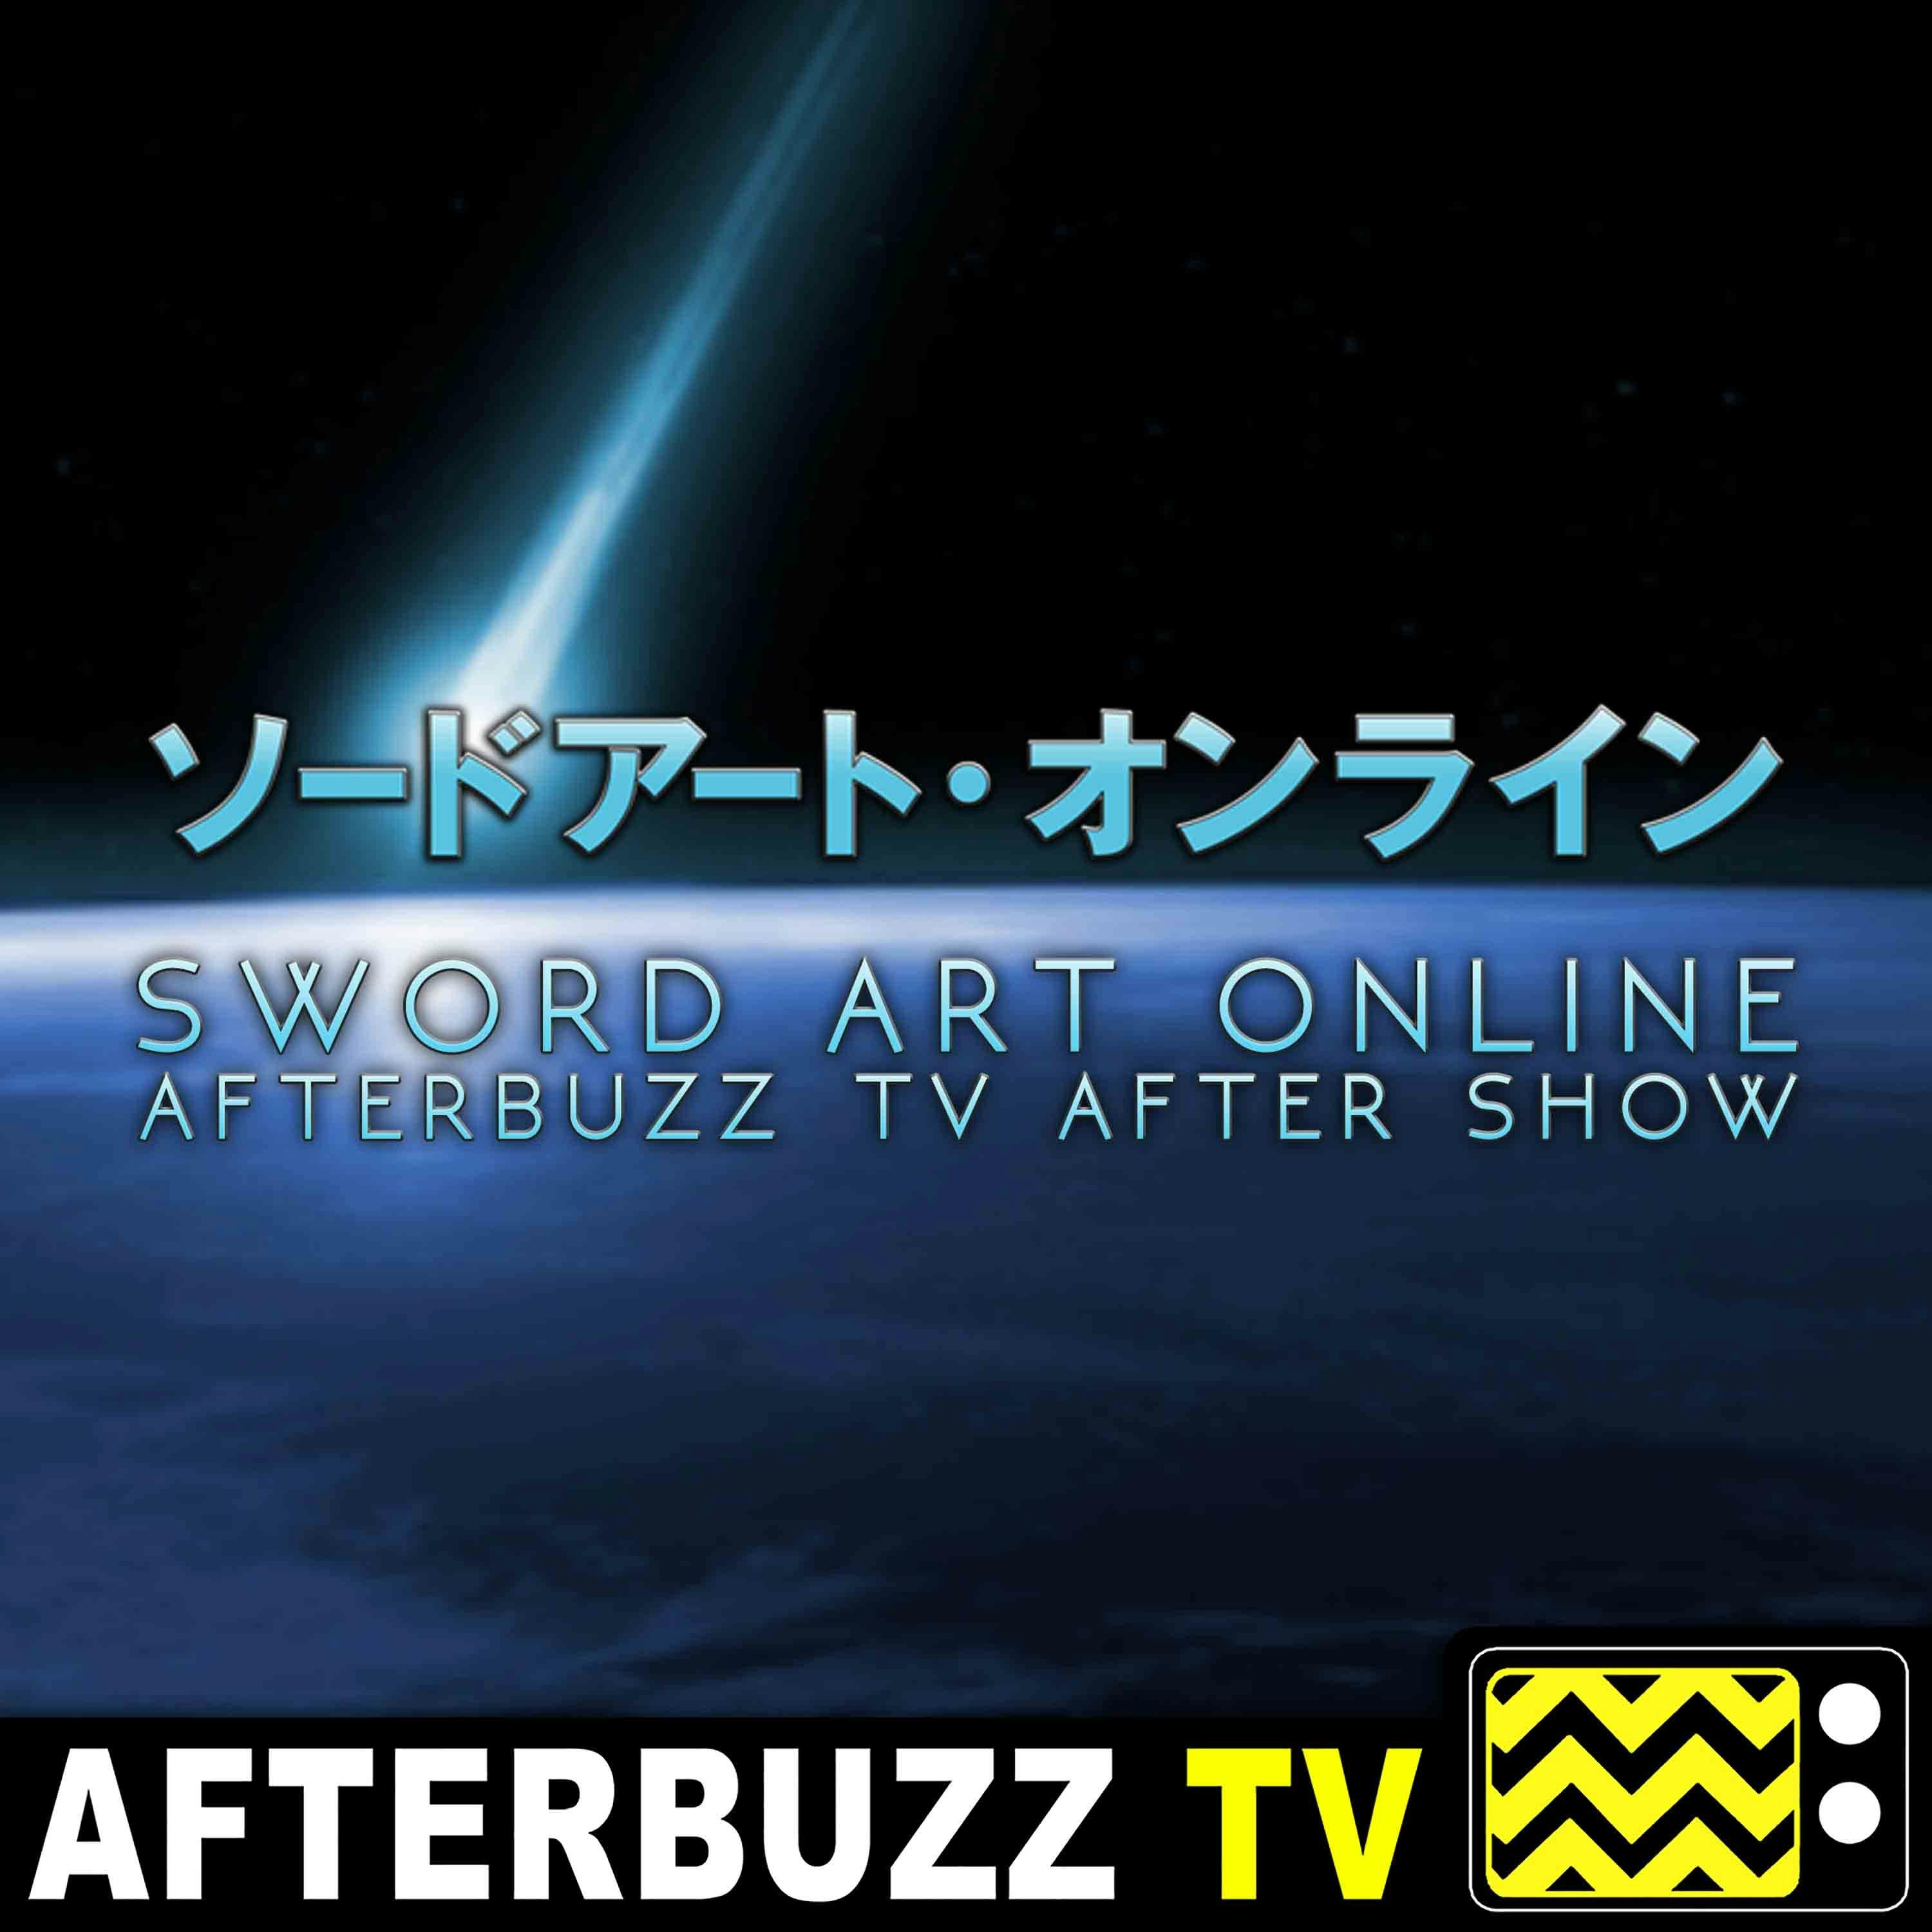 Sword Art Online S:1 | Xanthe Huynh, Lucien Dodge, & Erik Kimerer Guests on The World Seed E:25 | AfterBuzz TV AfterShow